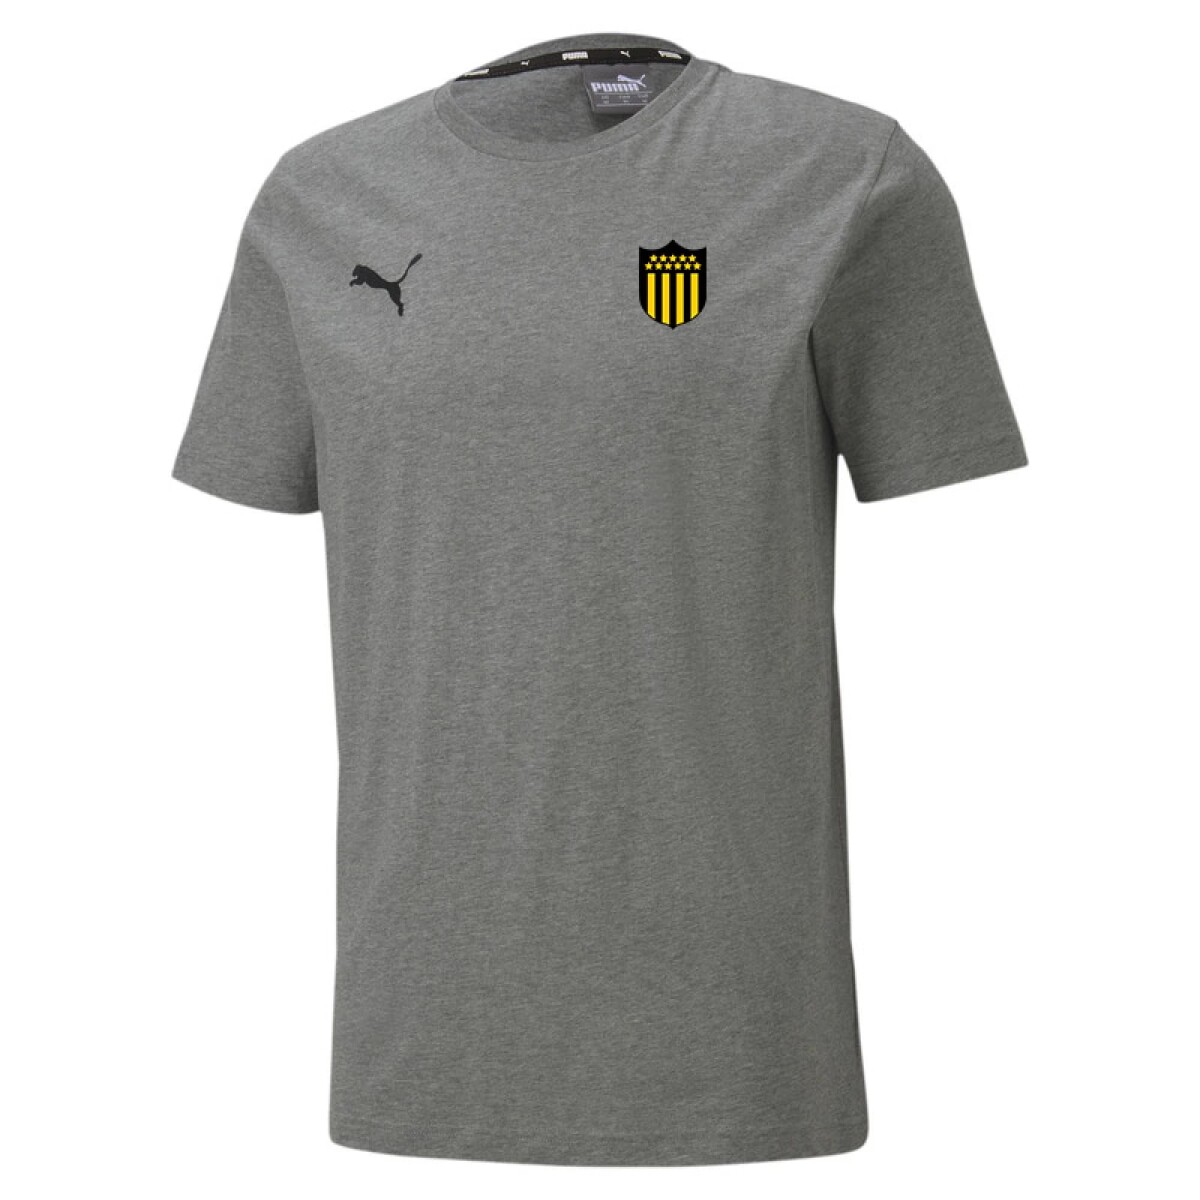 Camiseta Puma Peñarol Hombre Cassual Tee Gris - S/C 